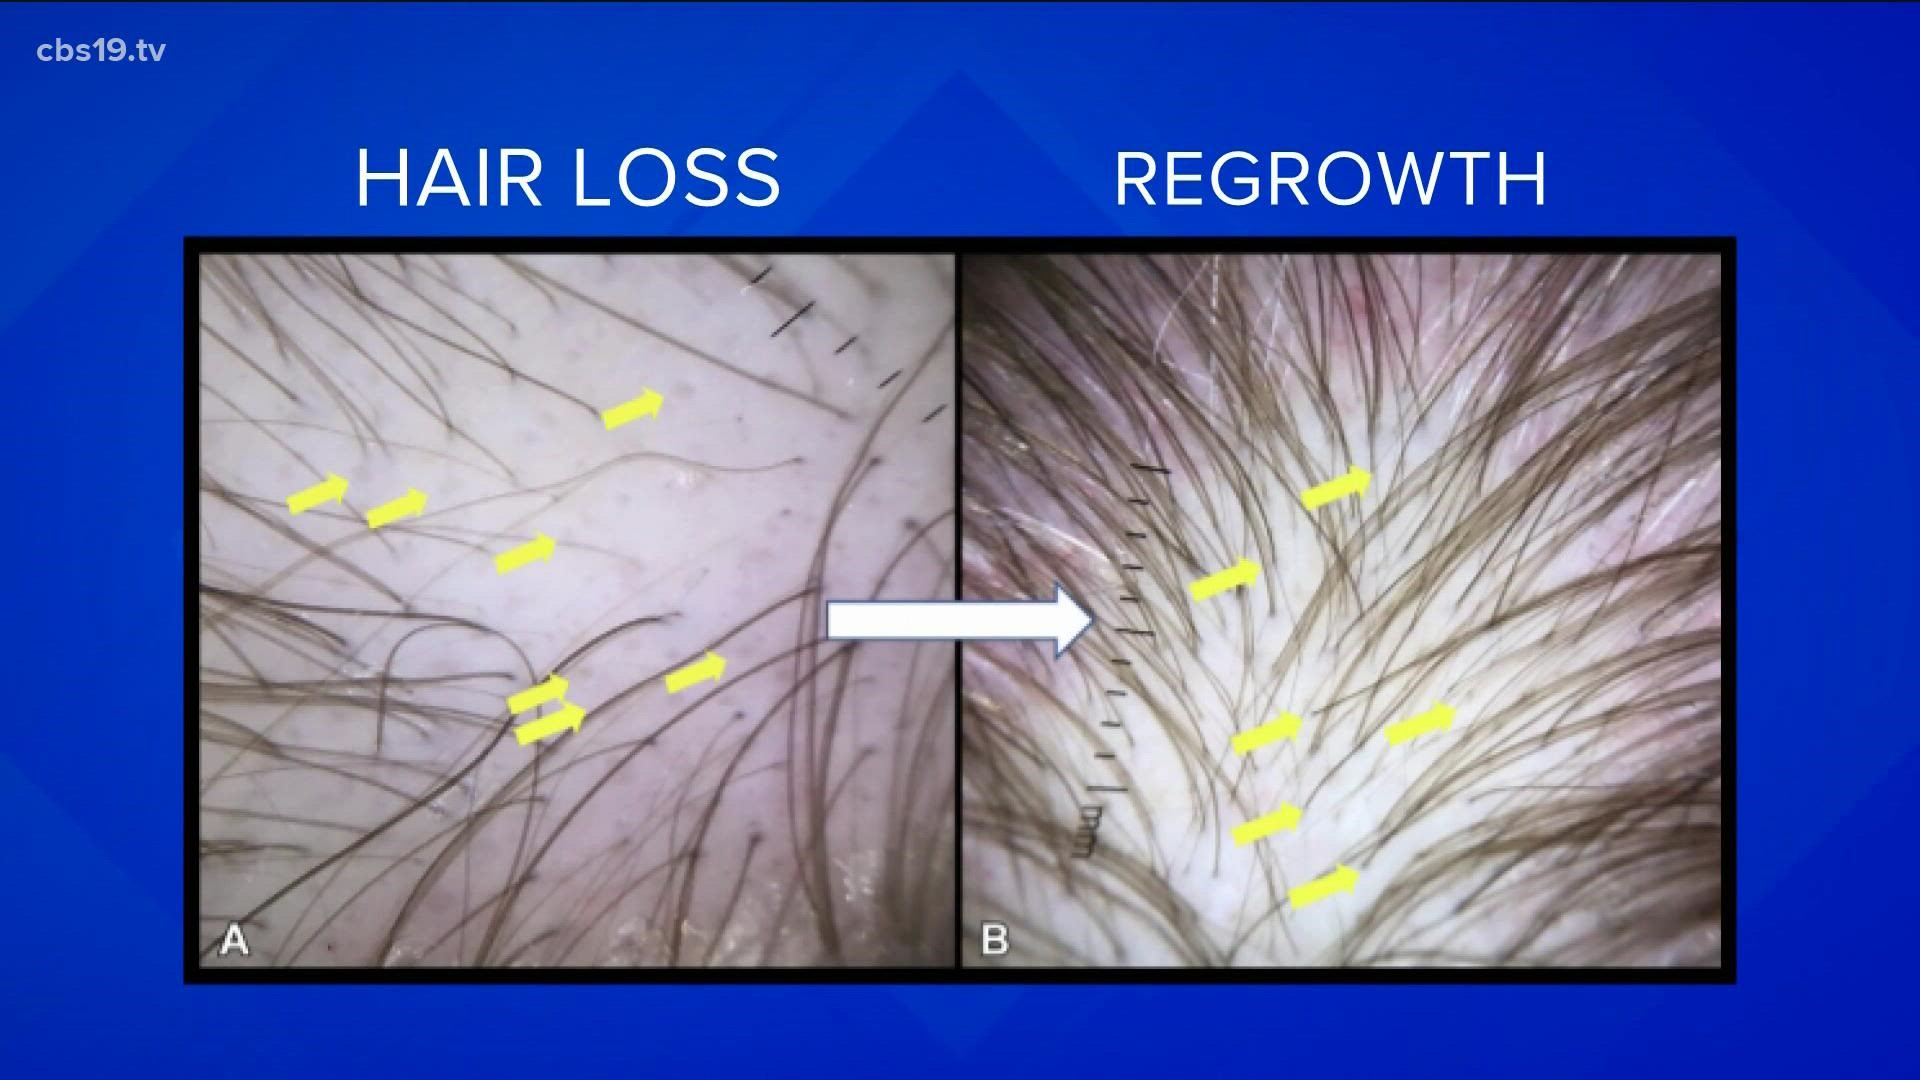 Hair loss is long-haul side effect of COVID-19 | cbs19.tv